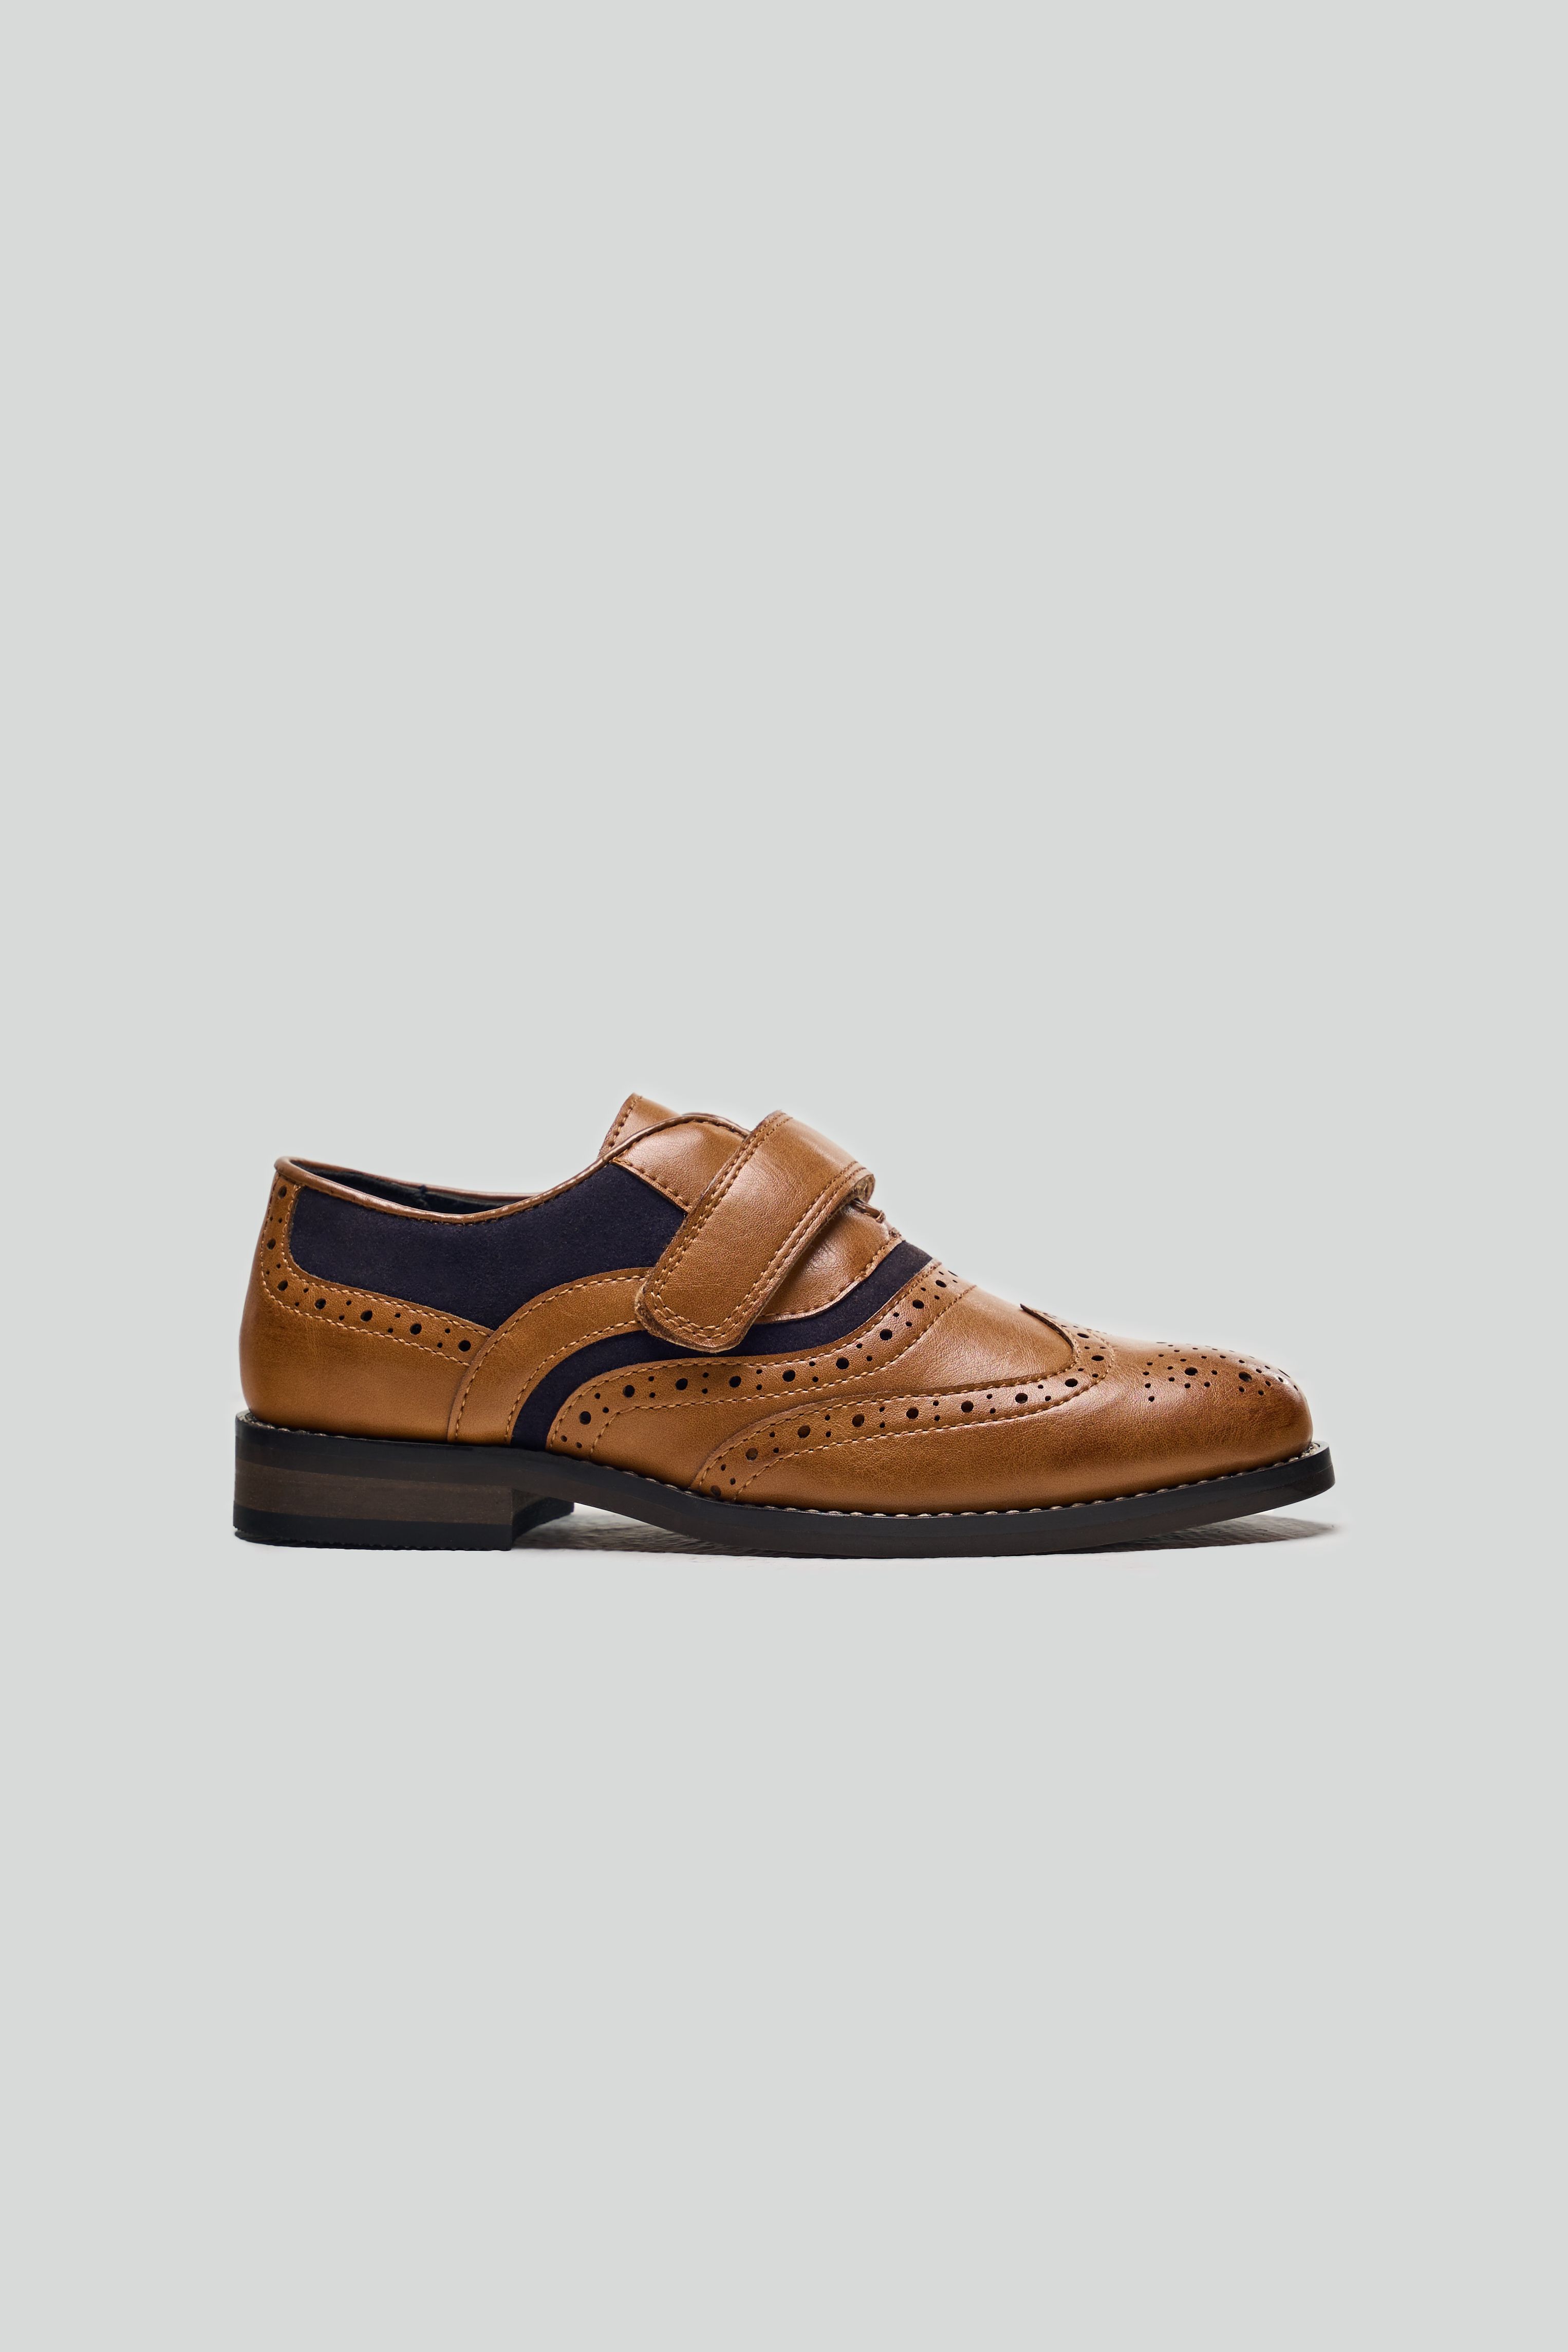 Boys Velcro Oxford Brogue Dress shoes - RUSSEL - Tan Brown - Navy Blue